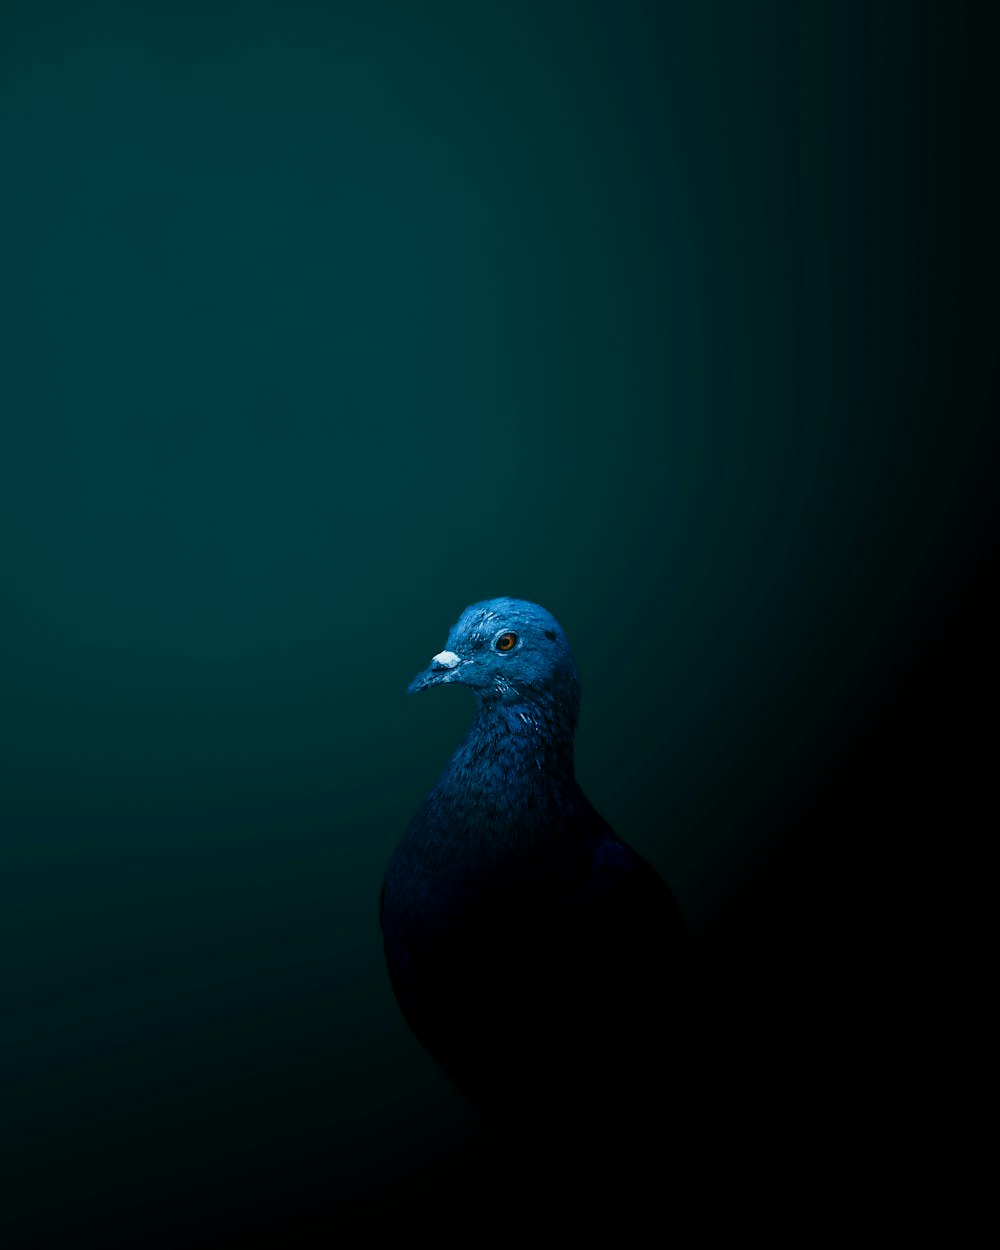 a blue bird is standing in the dark